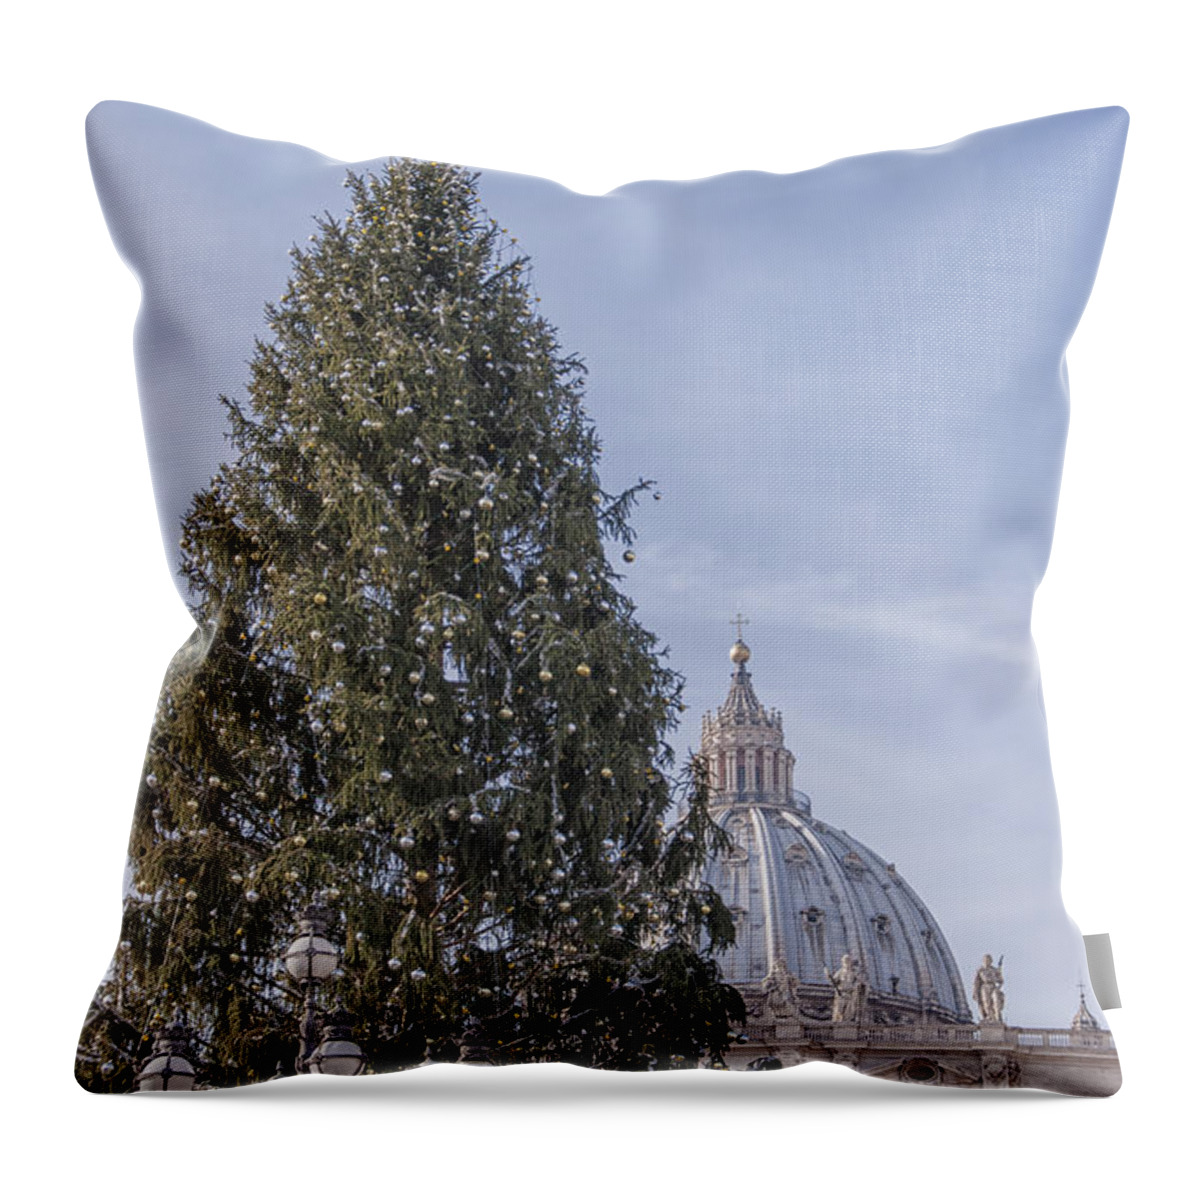 Christmas Throw Pillow featuring the photograph Vatican Christmas Tree by Antony McAulay